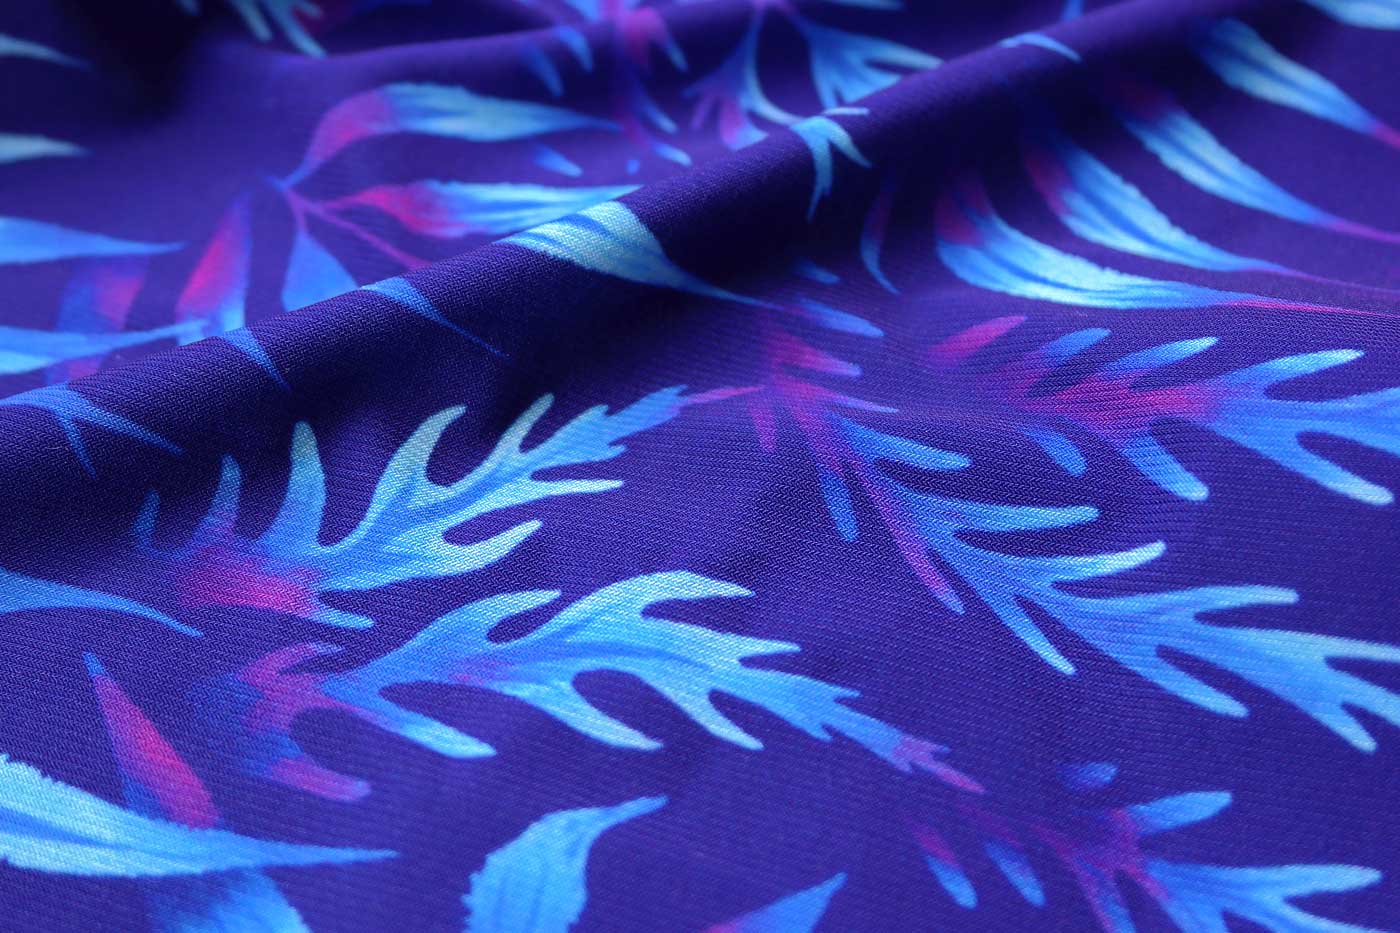 Fern leaf print fabric blue by Andrea Muller